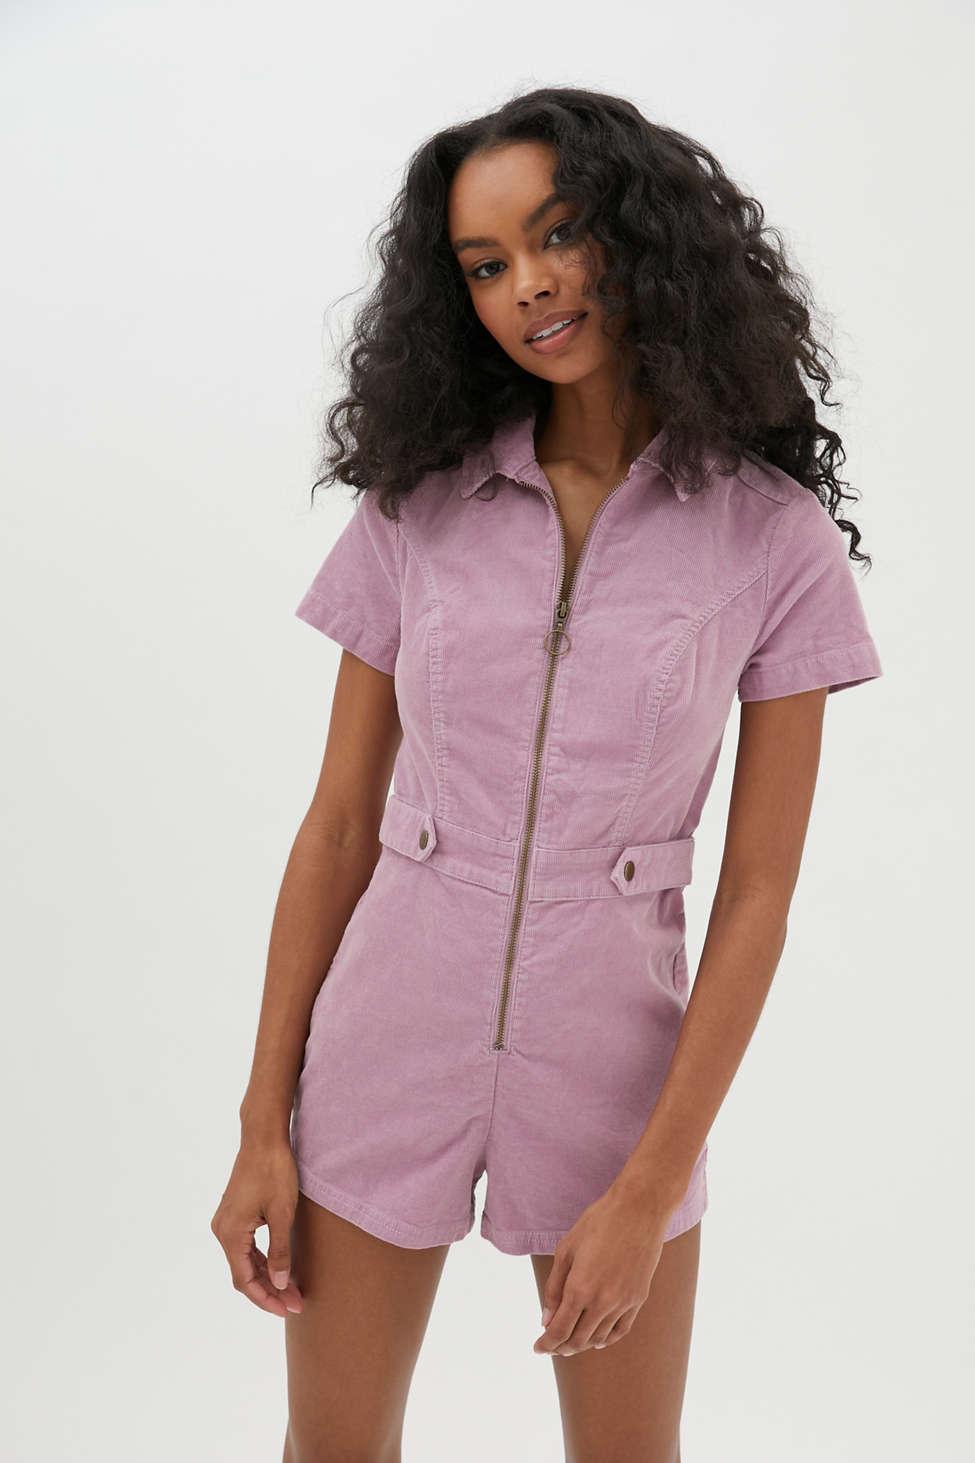 Urban Outfitters Uo Tyson Zip-front Short Sleeve Romper in Purple